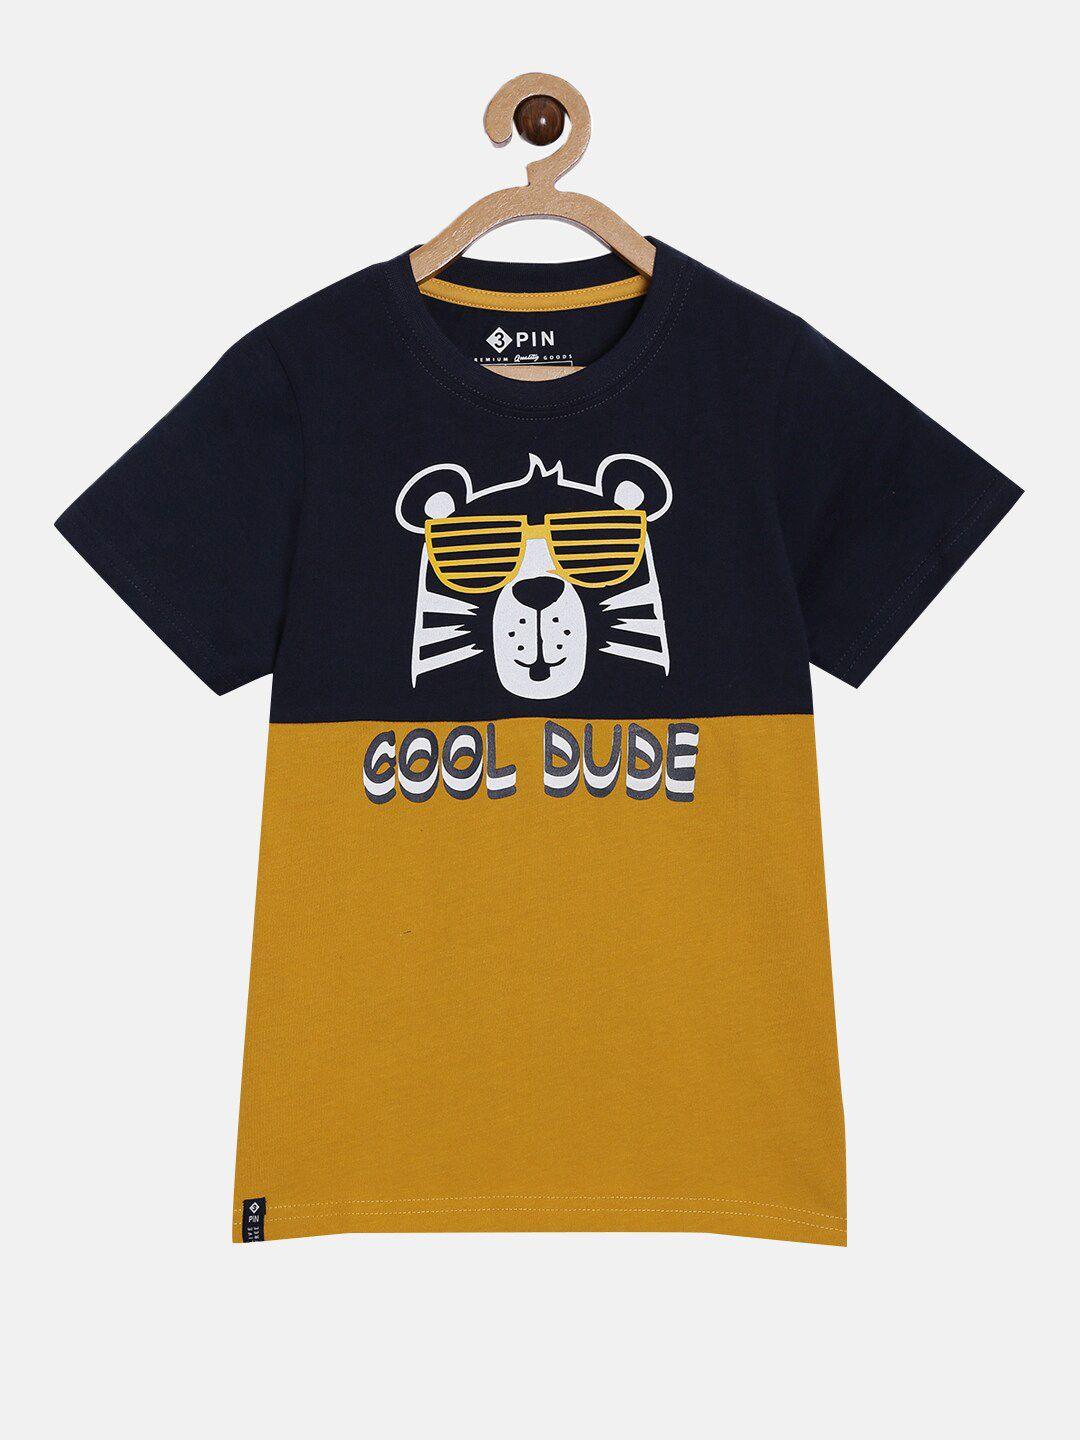 3pin boys navy blue & mustard graphic printed t-shirt